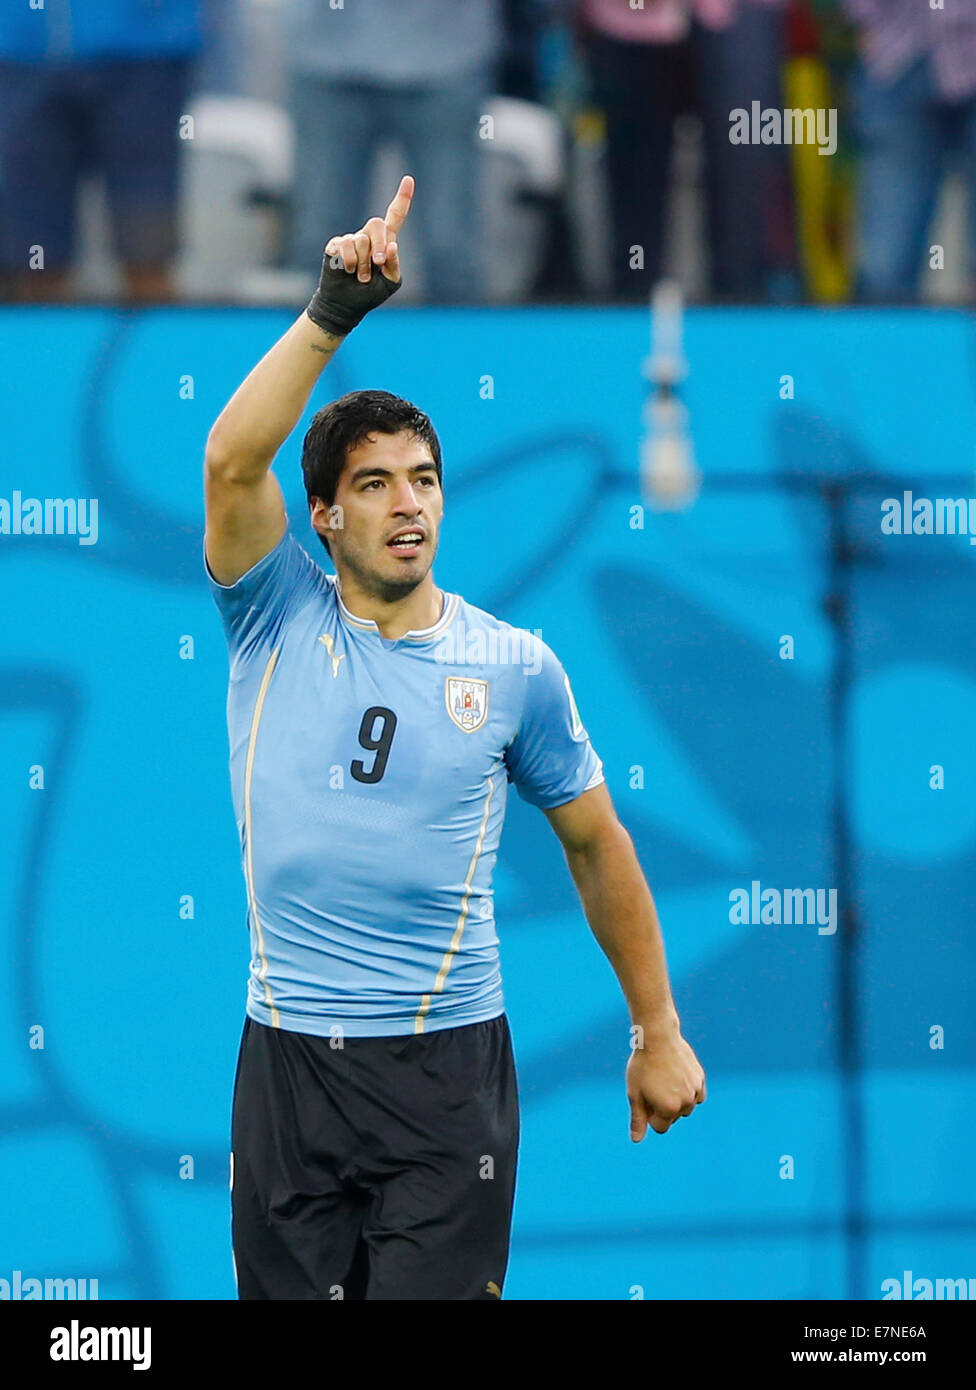 Luis Suarez. Uruguay v England, group match. FIFA World Cup 2014. Arena de  Sao Paulo, Sao Paulo. 19 Jun 2014 Stock Photo - Alamy